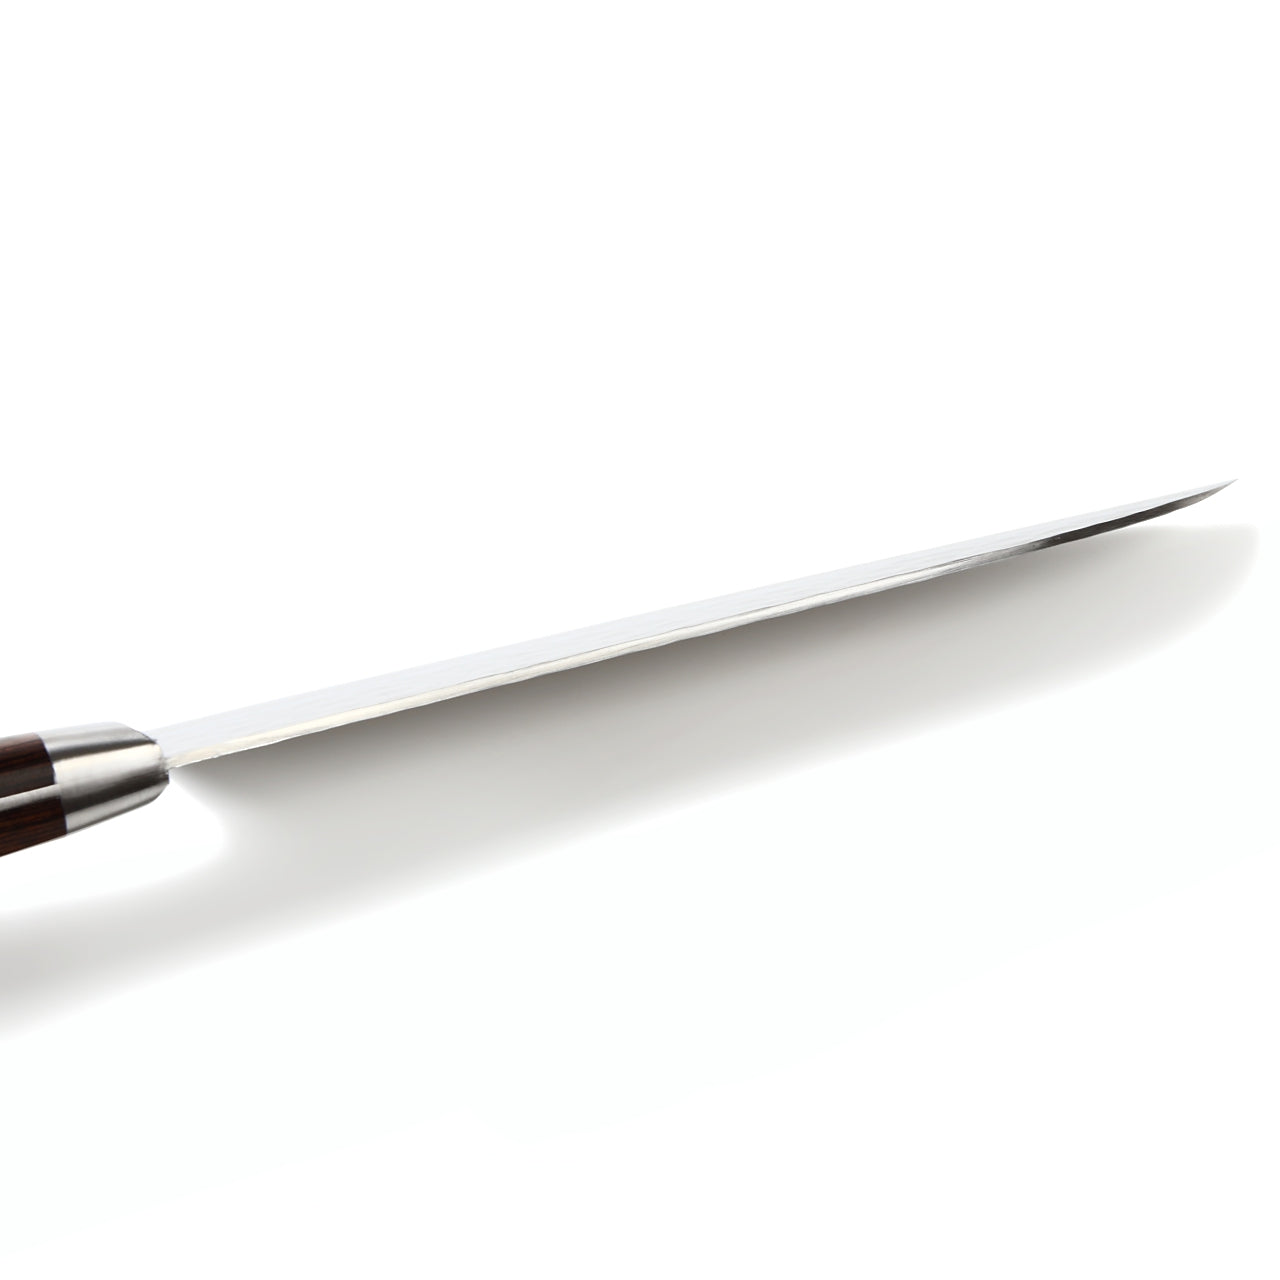 SAHN ZU Damascus Chef Knife Santoku Knife 7 Inch Professional Multifunction  Kitchen Knives, 67 Layers Damascus Stainless Steel AUS-10 Super Sharp